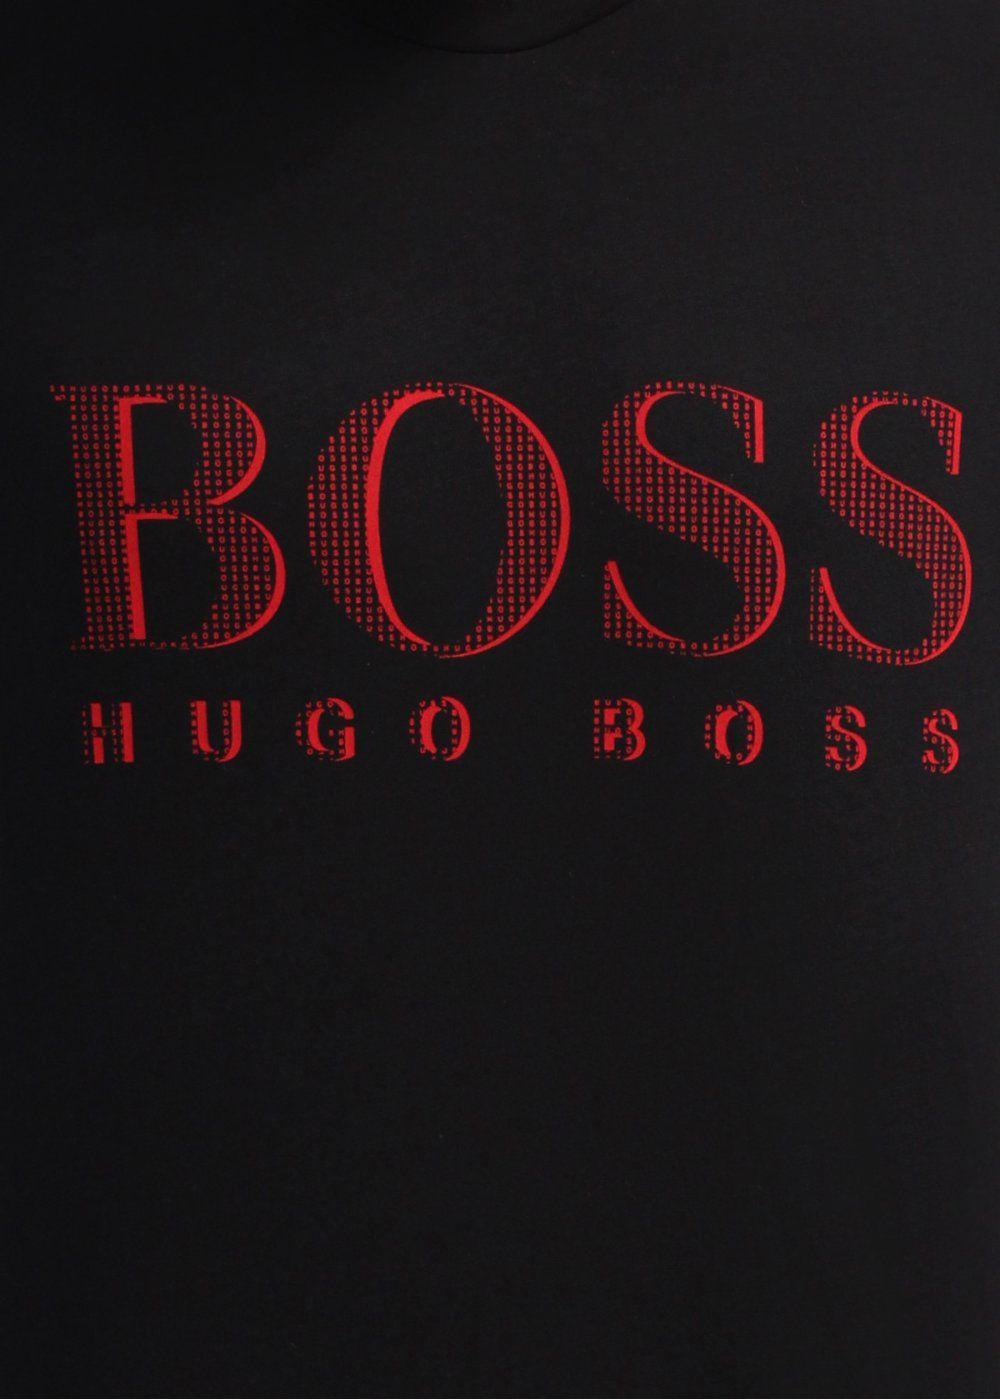 Hugo Boss Wallpaper